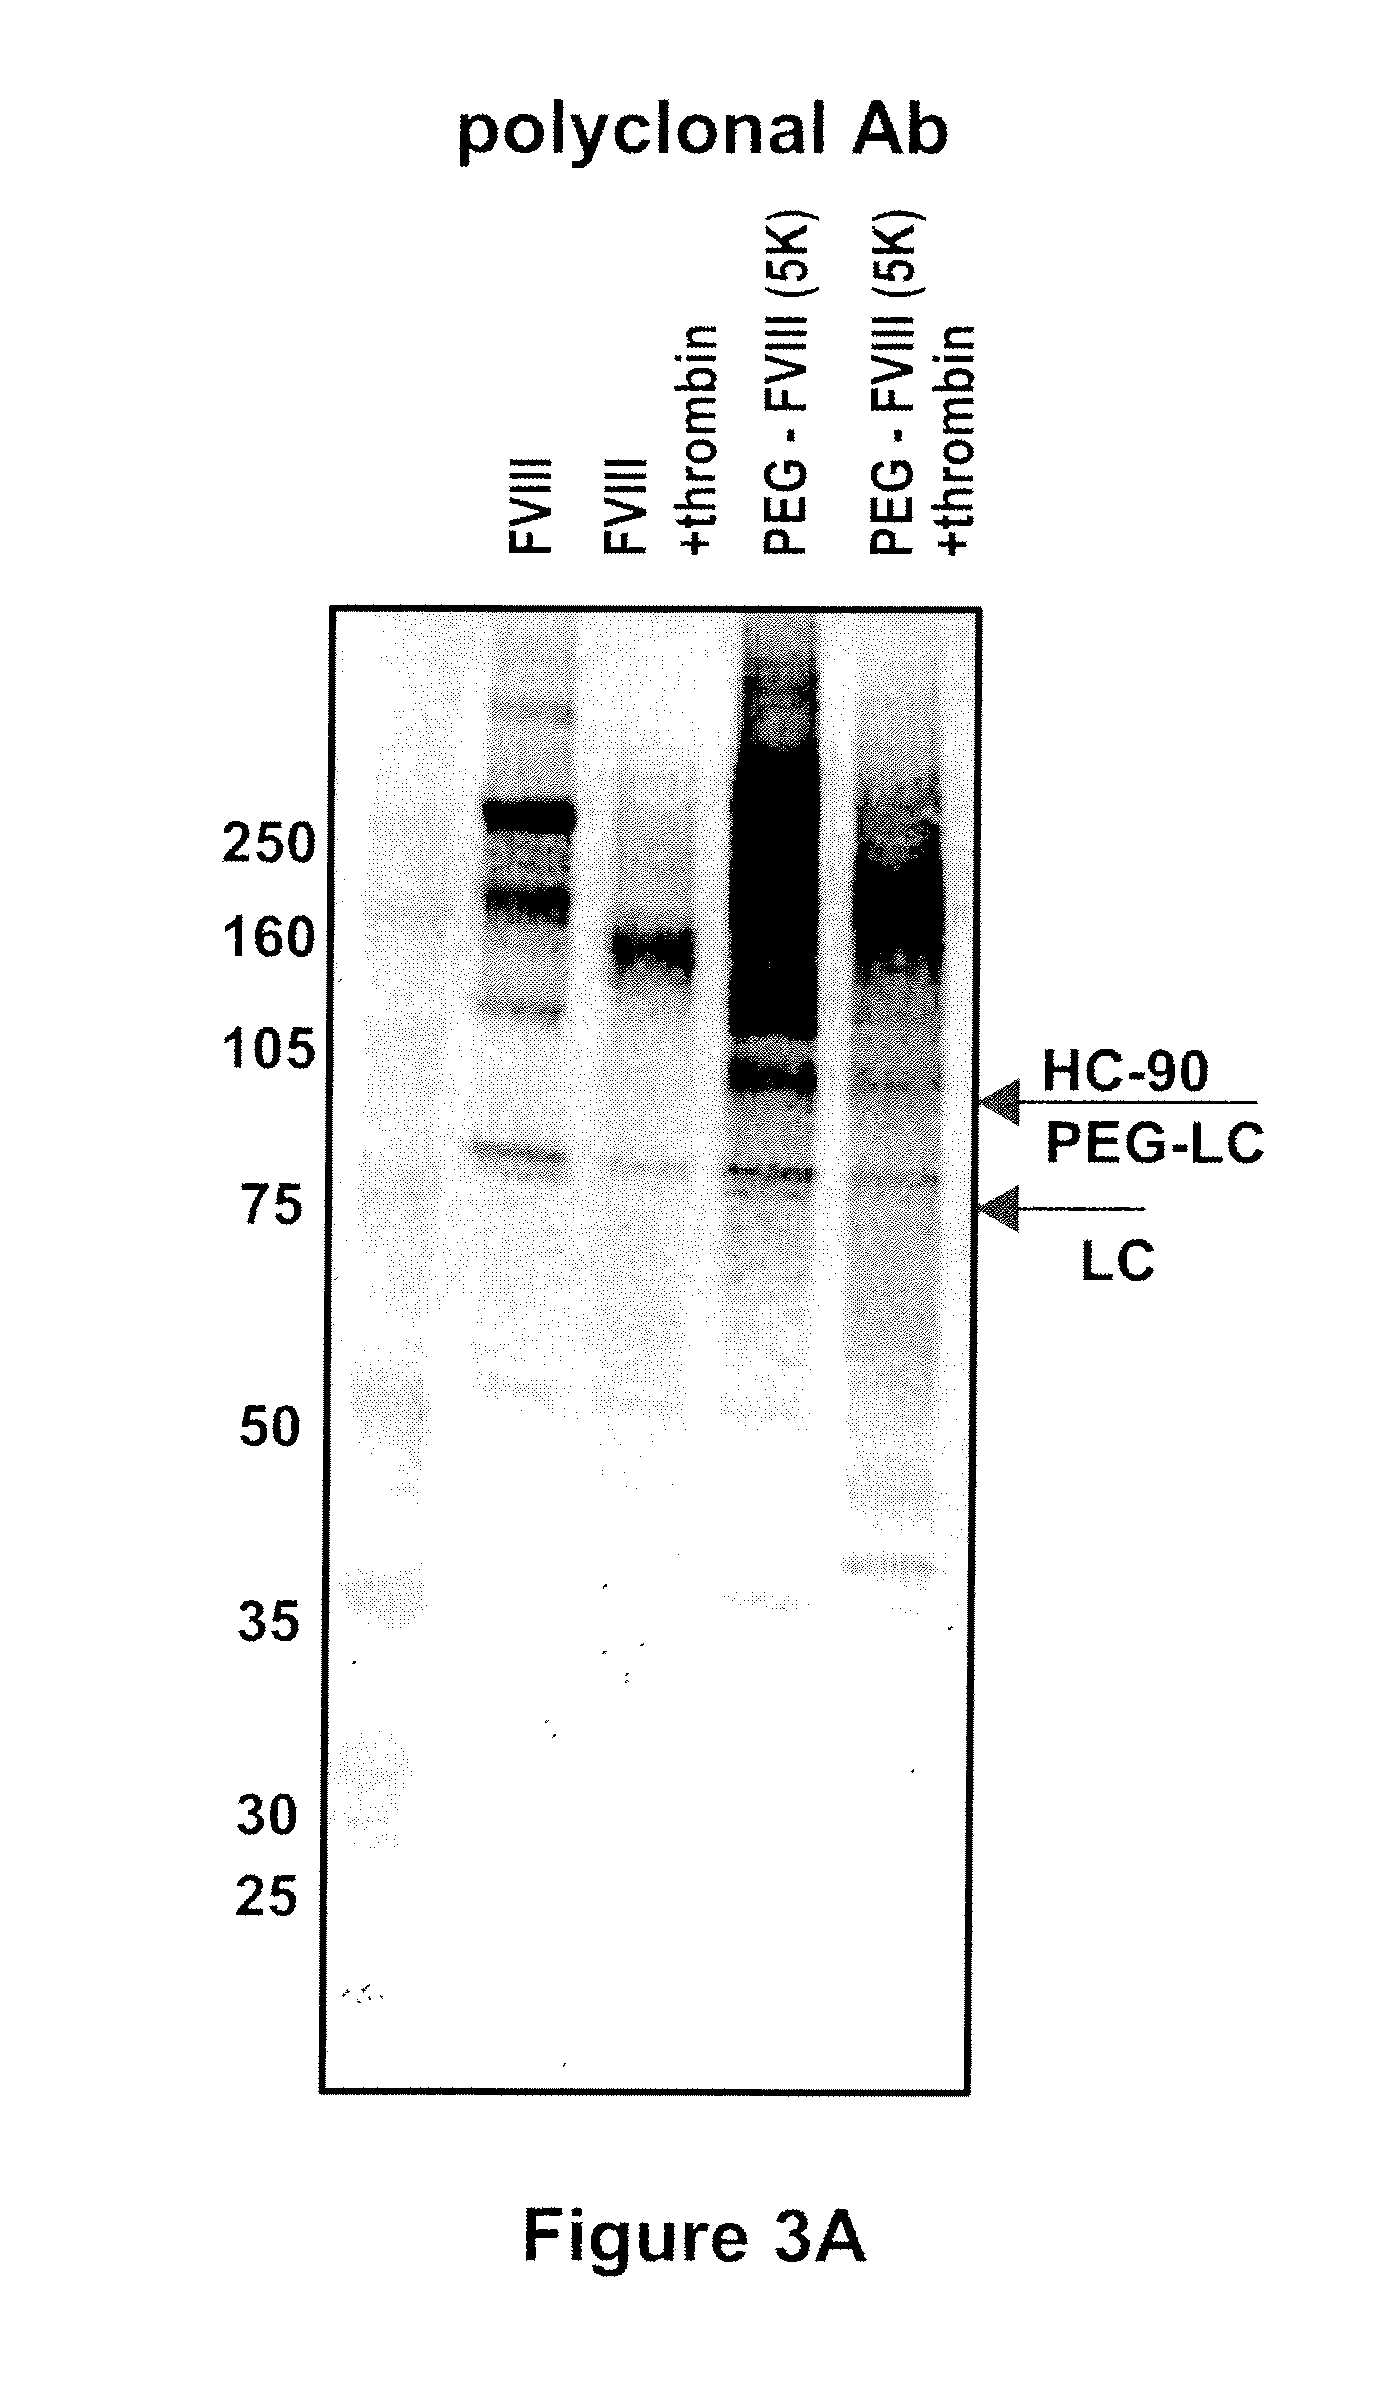 Factor VIII polymer conjugates